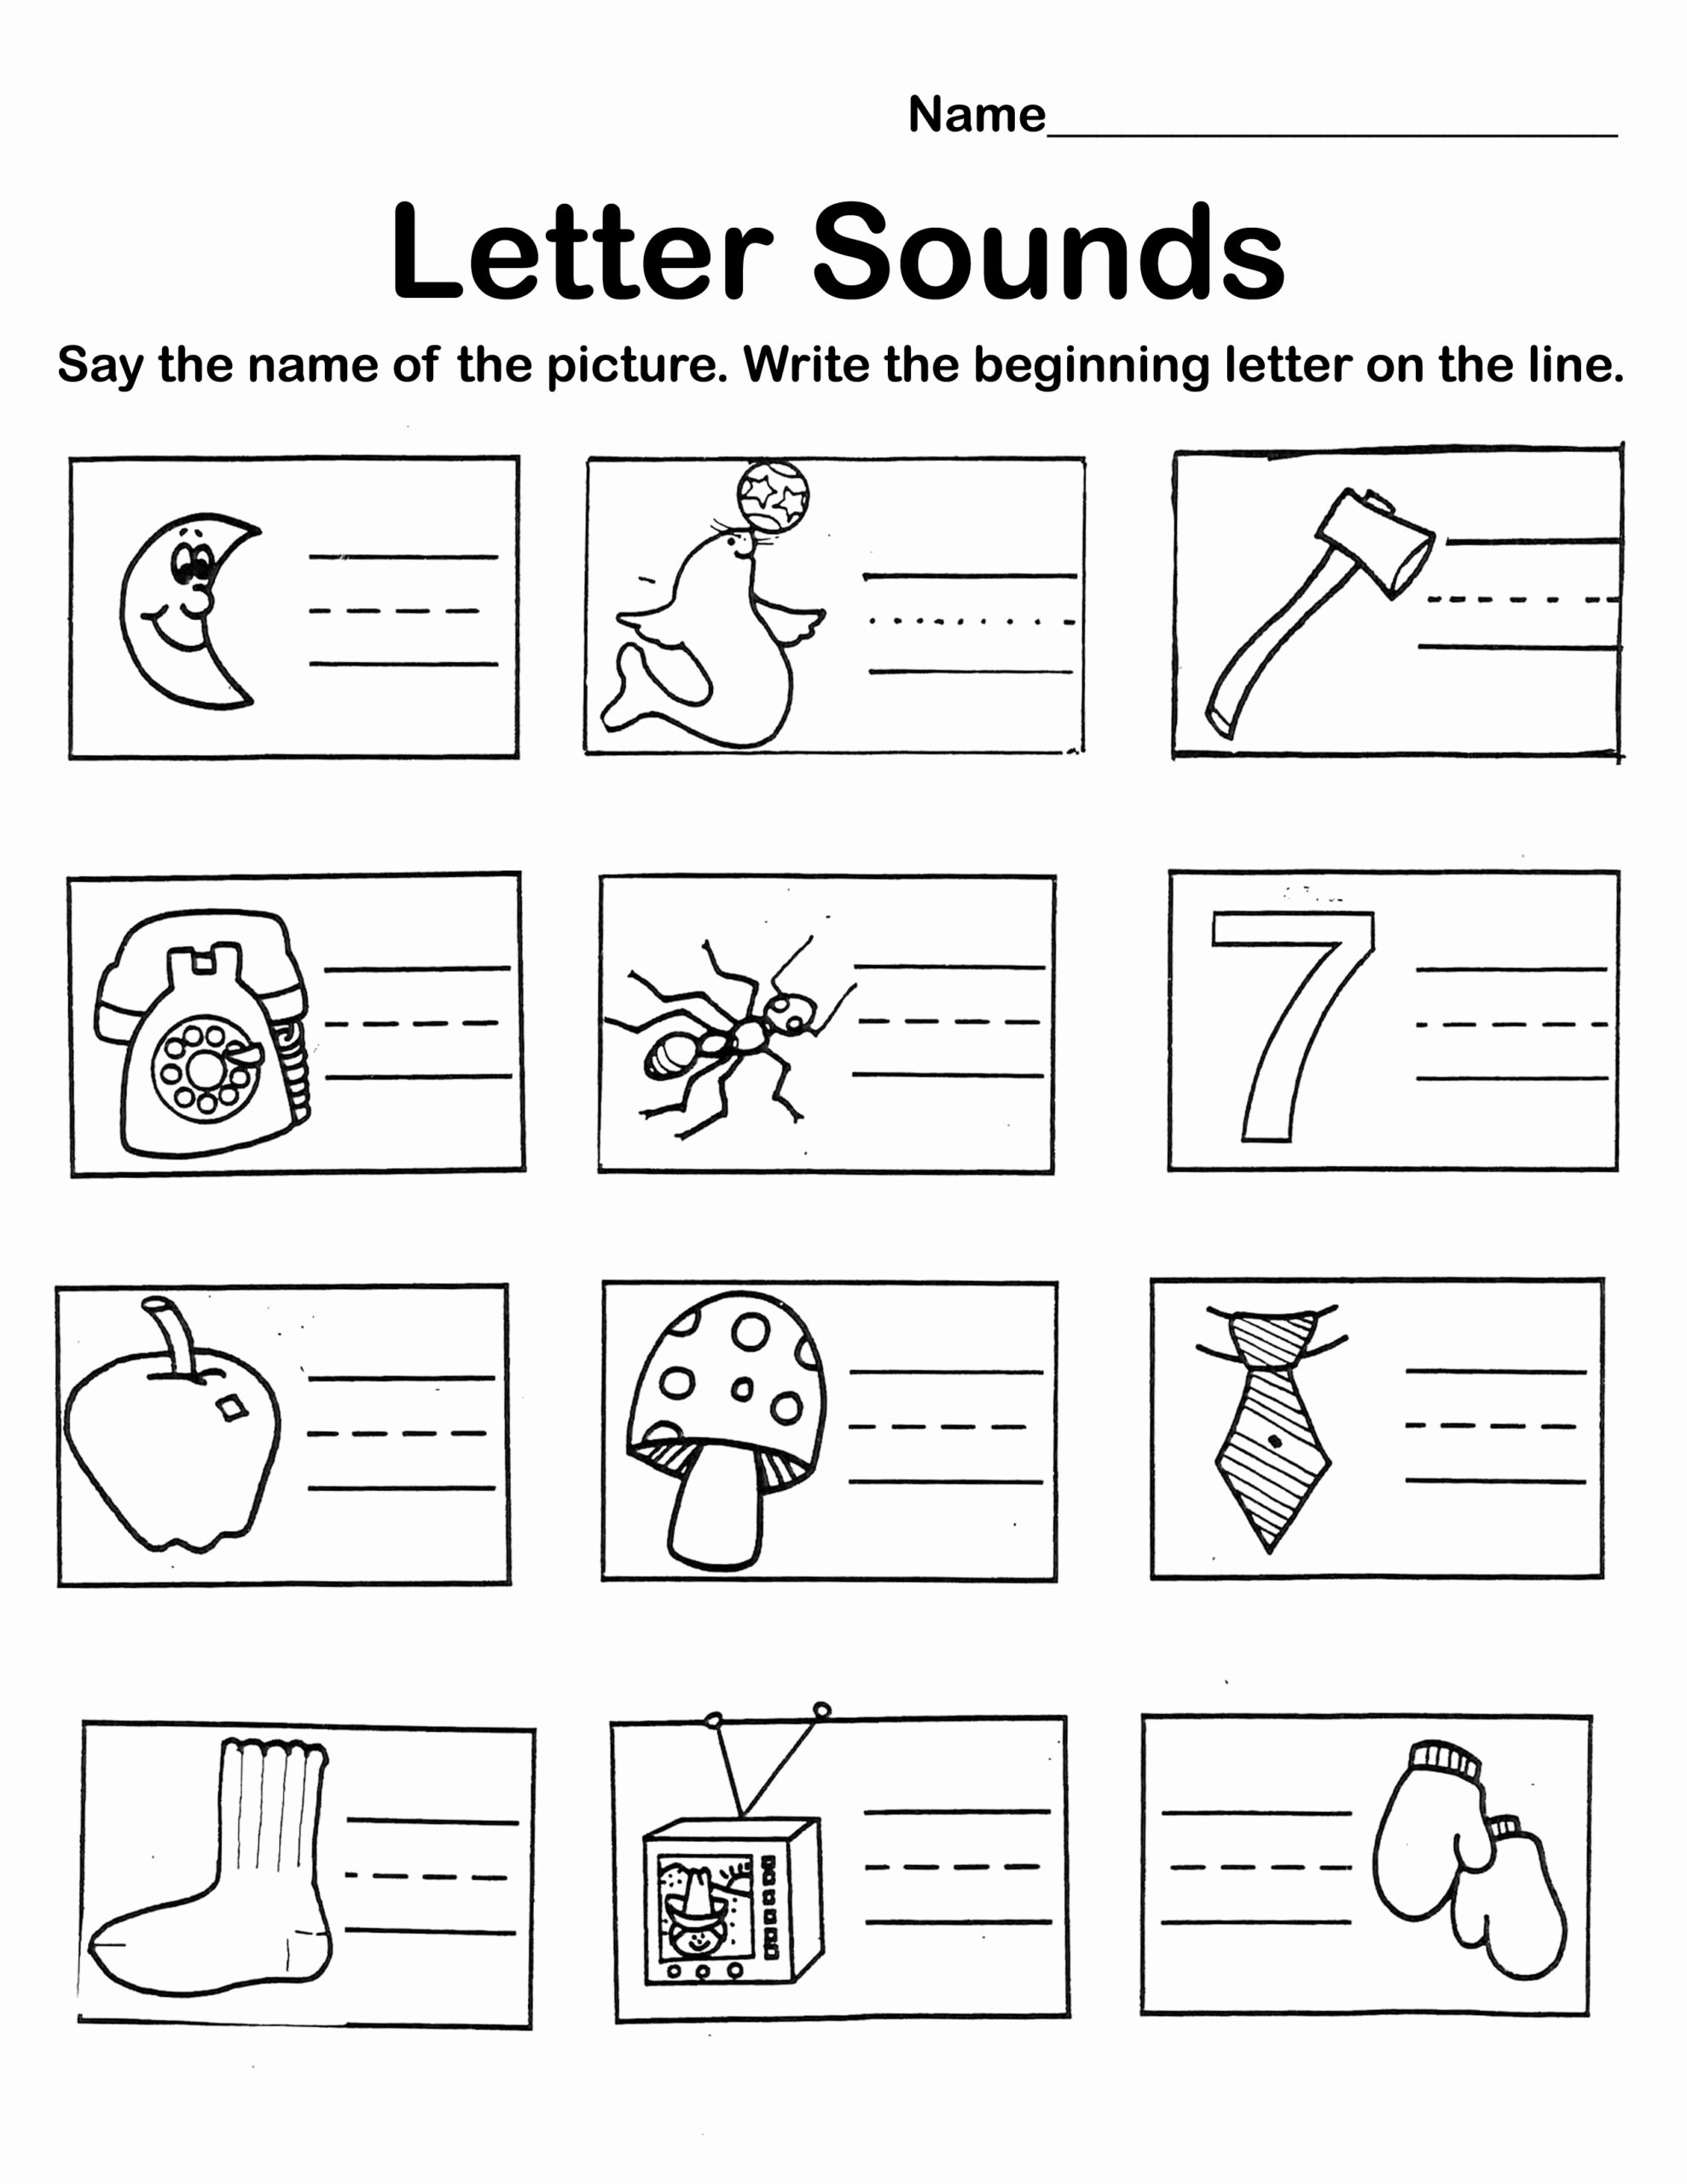 Alphabet Exercises For Kindergarten Pdf - Clover Hatunisi within Alphabet Sounds Worksheets Pdf